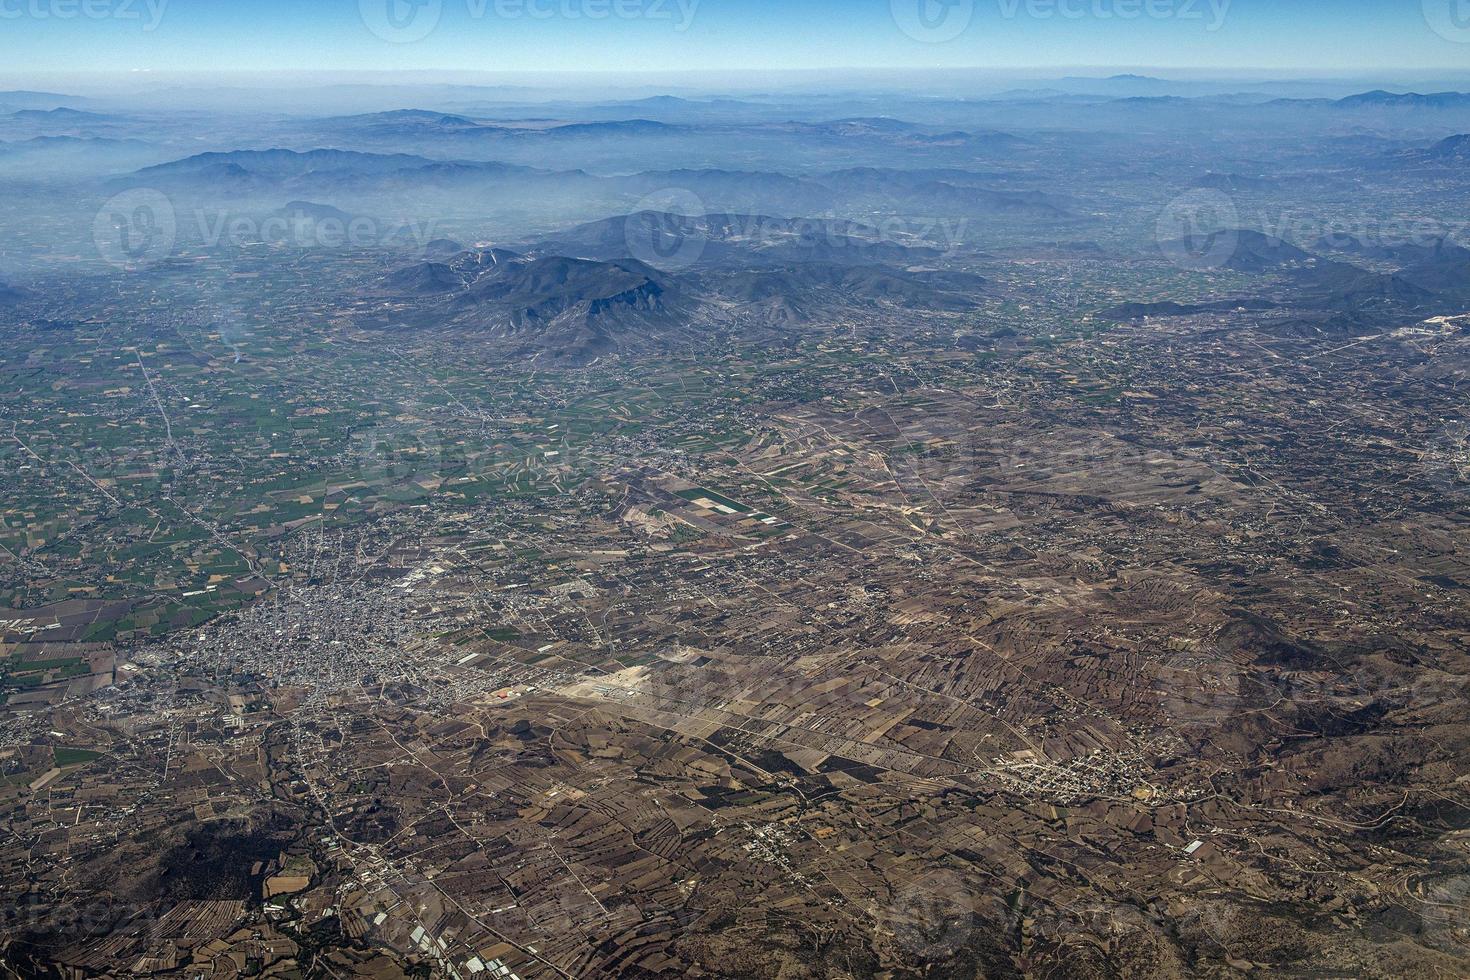 montañas cañones plateu tierras altas ciudad de méxico vista aérea paisaje urbano panorama foto